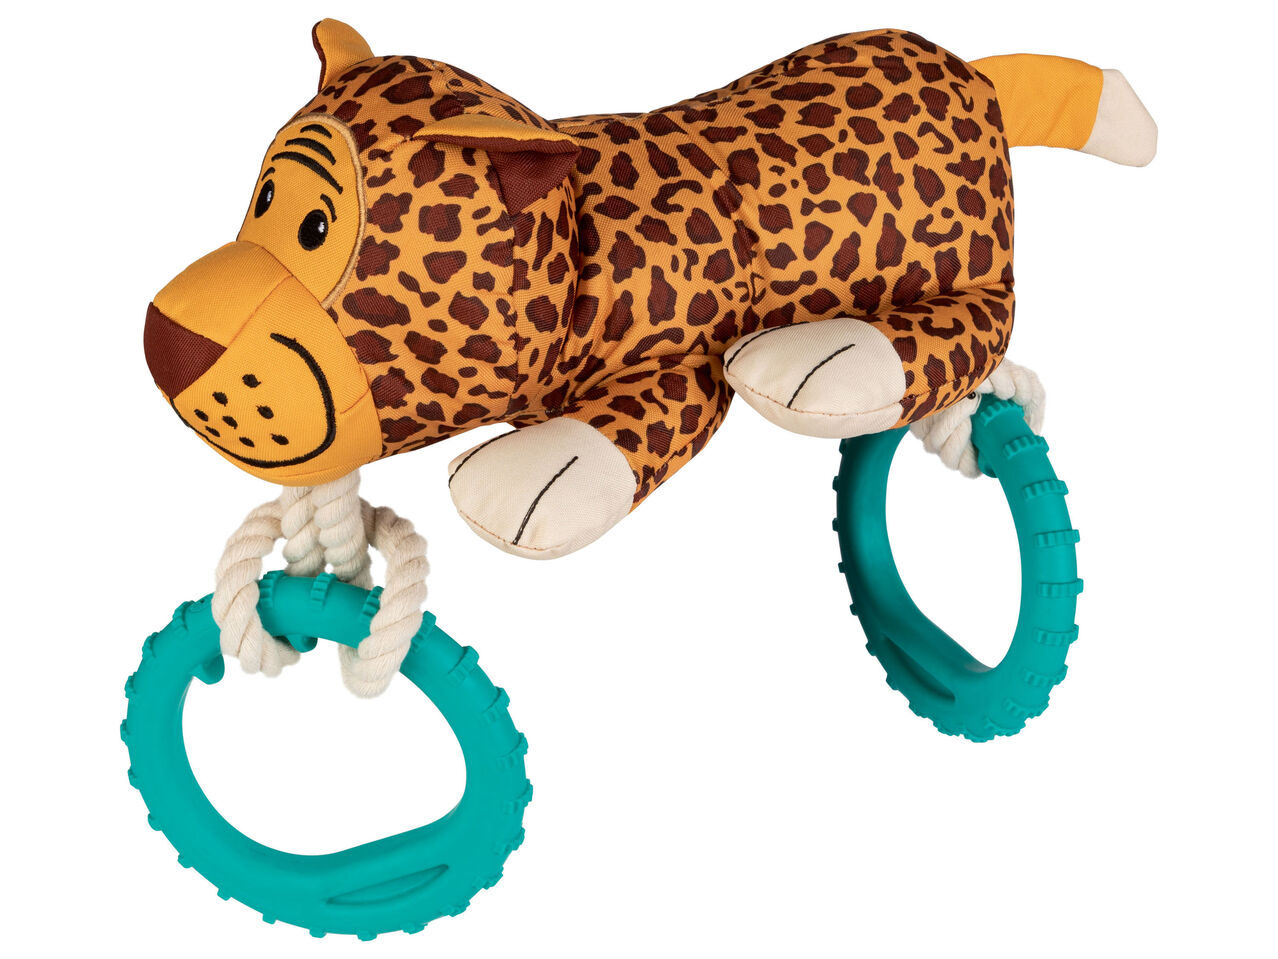 ZOOFARI® Zabawka dla psa , cena 29,99 PLN 
ZOOFARI® Zabawka dla psa 3 wzory 
- ...